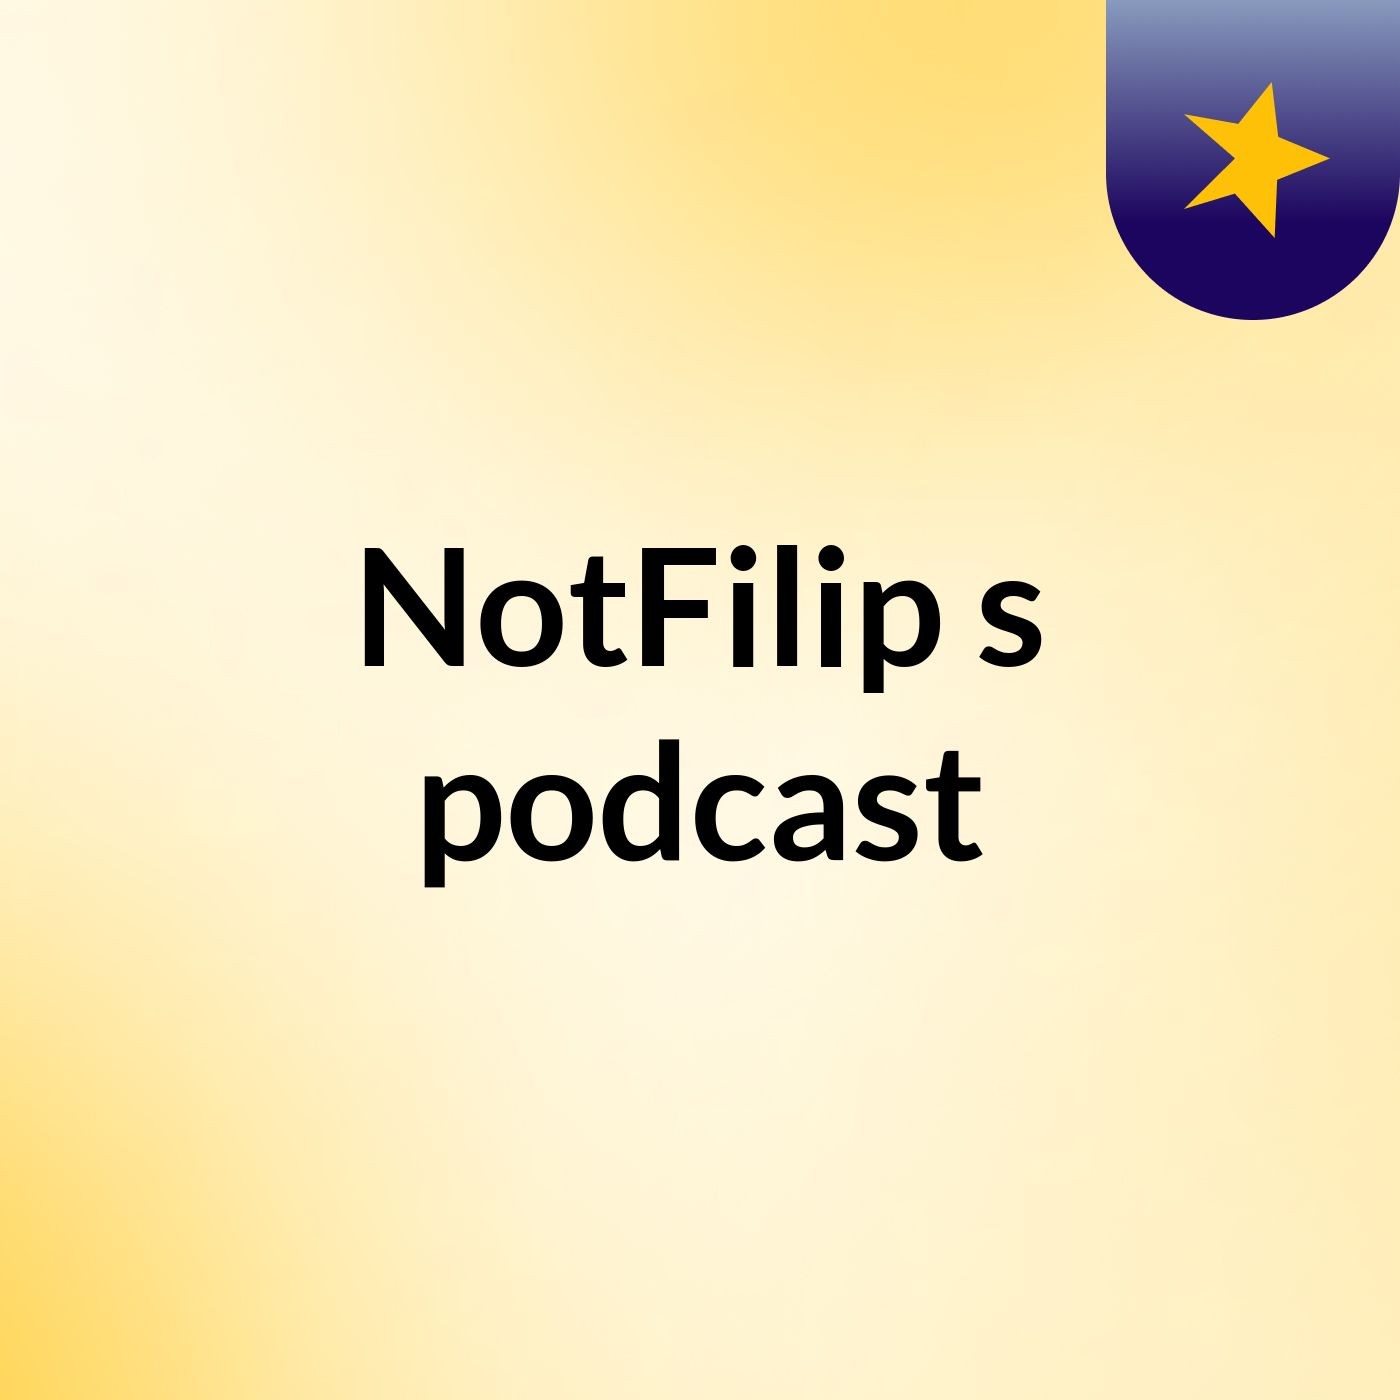 NotFilip's podcast